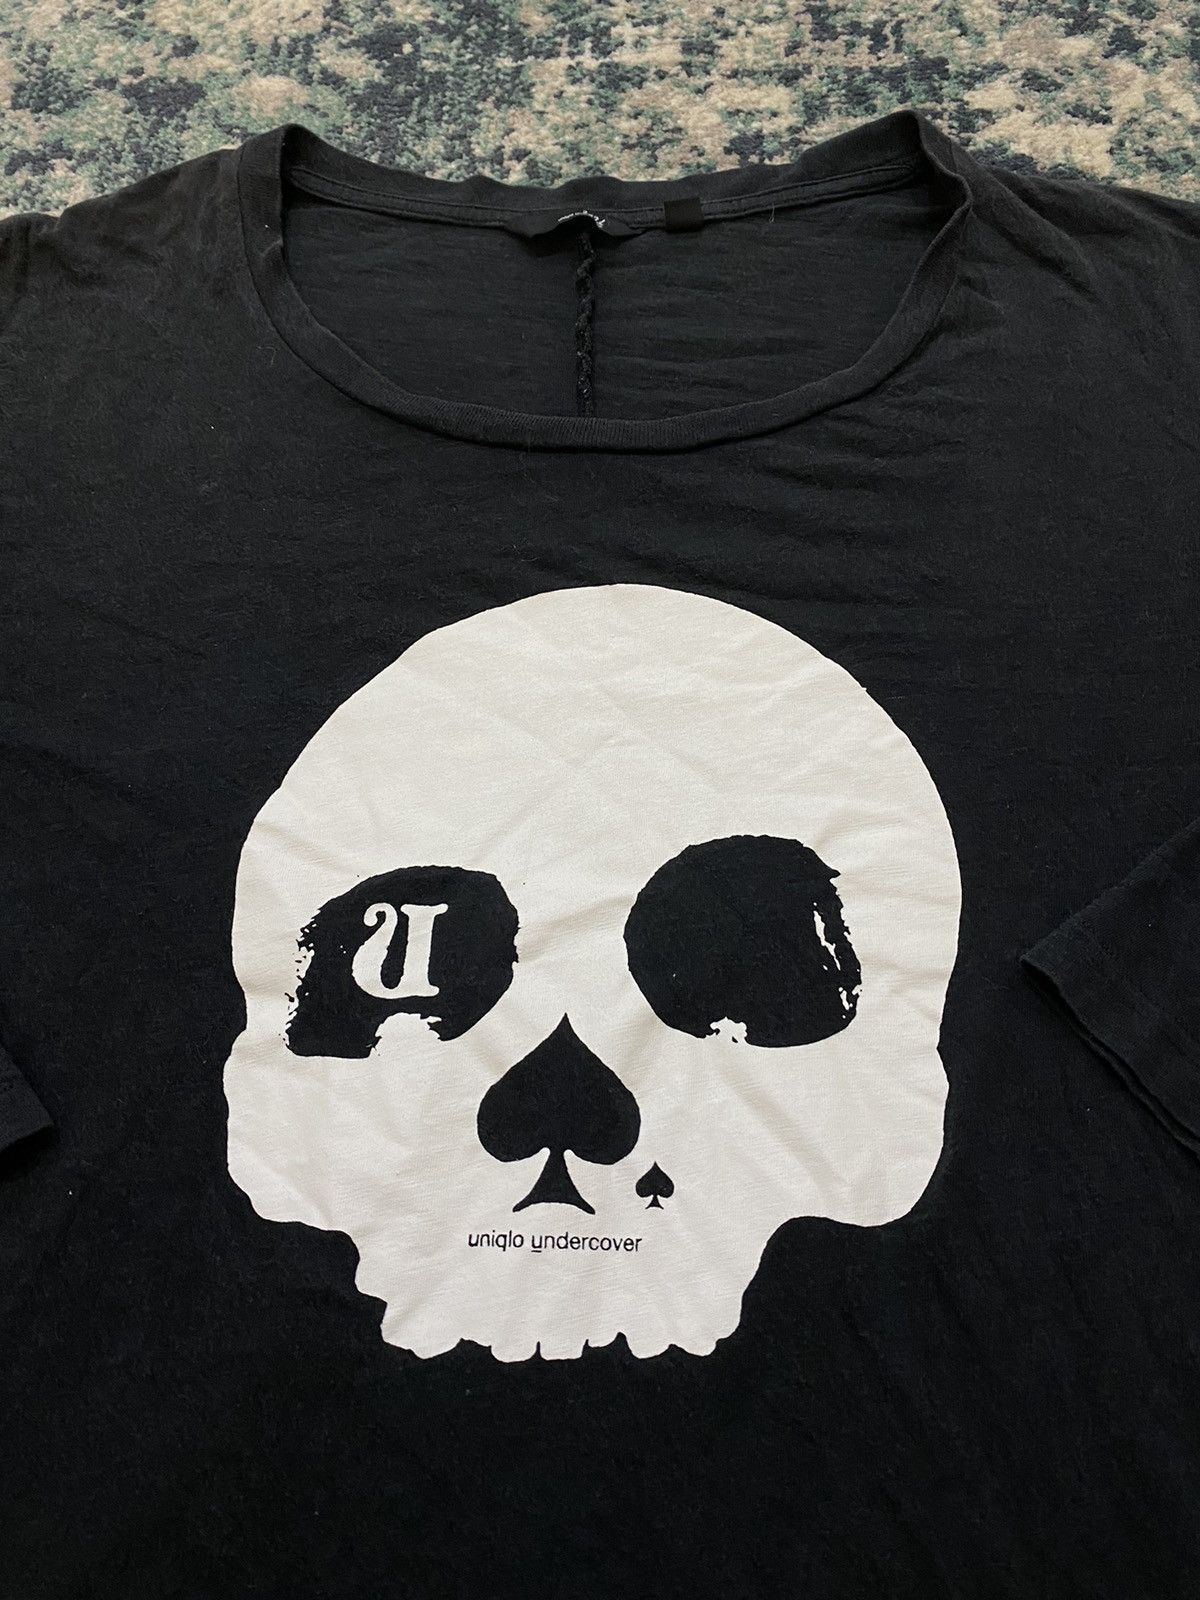 SS12 Undercover x Uniqlo Skull Shirt - 2